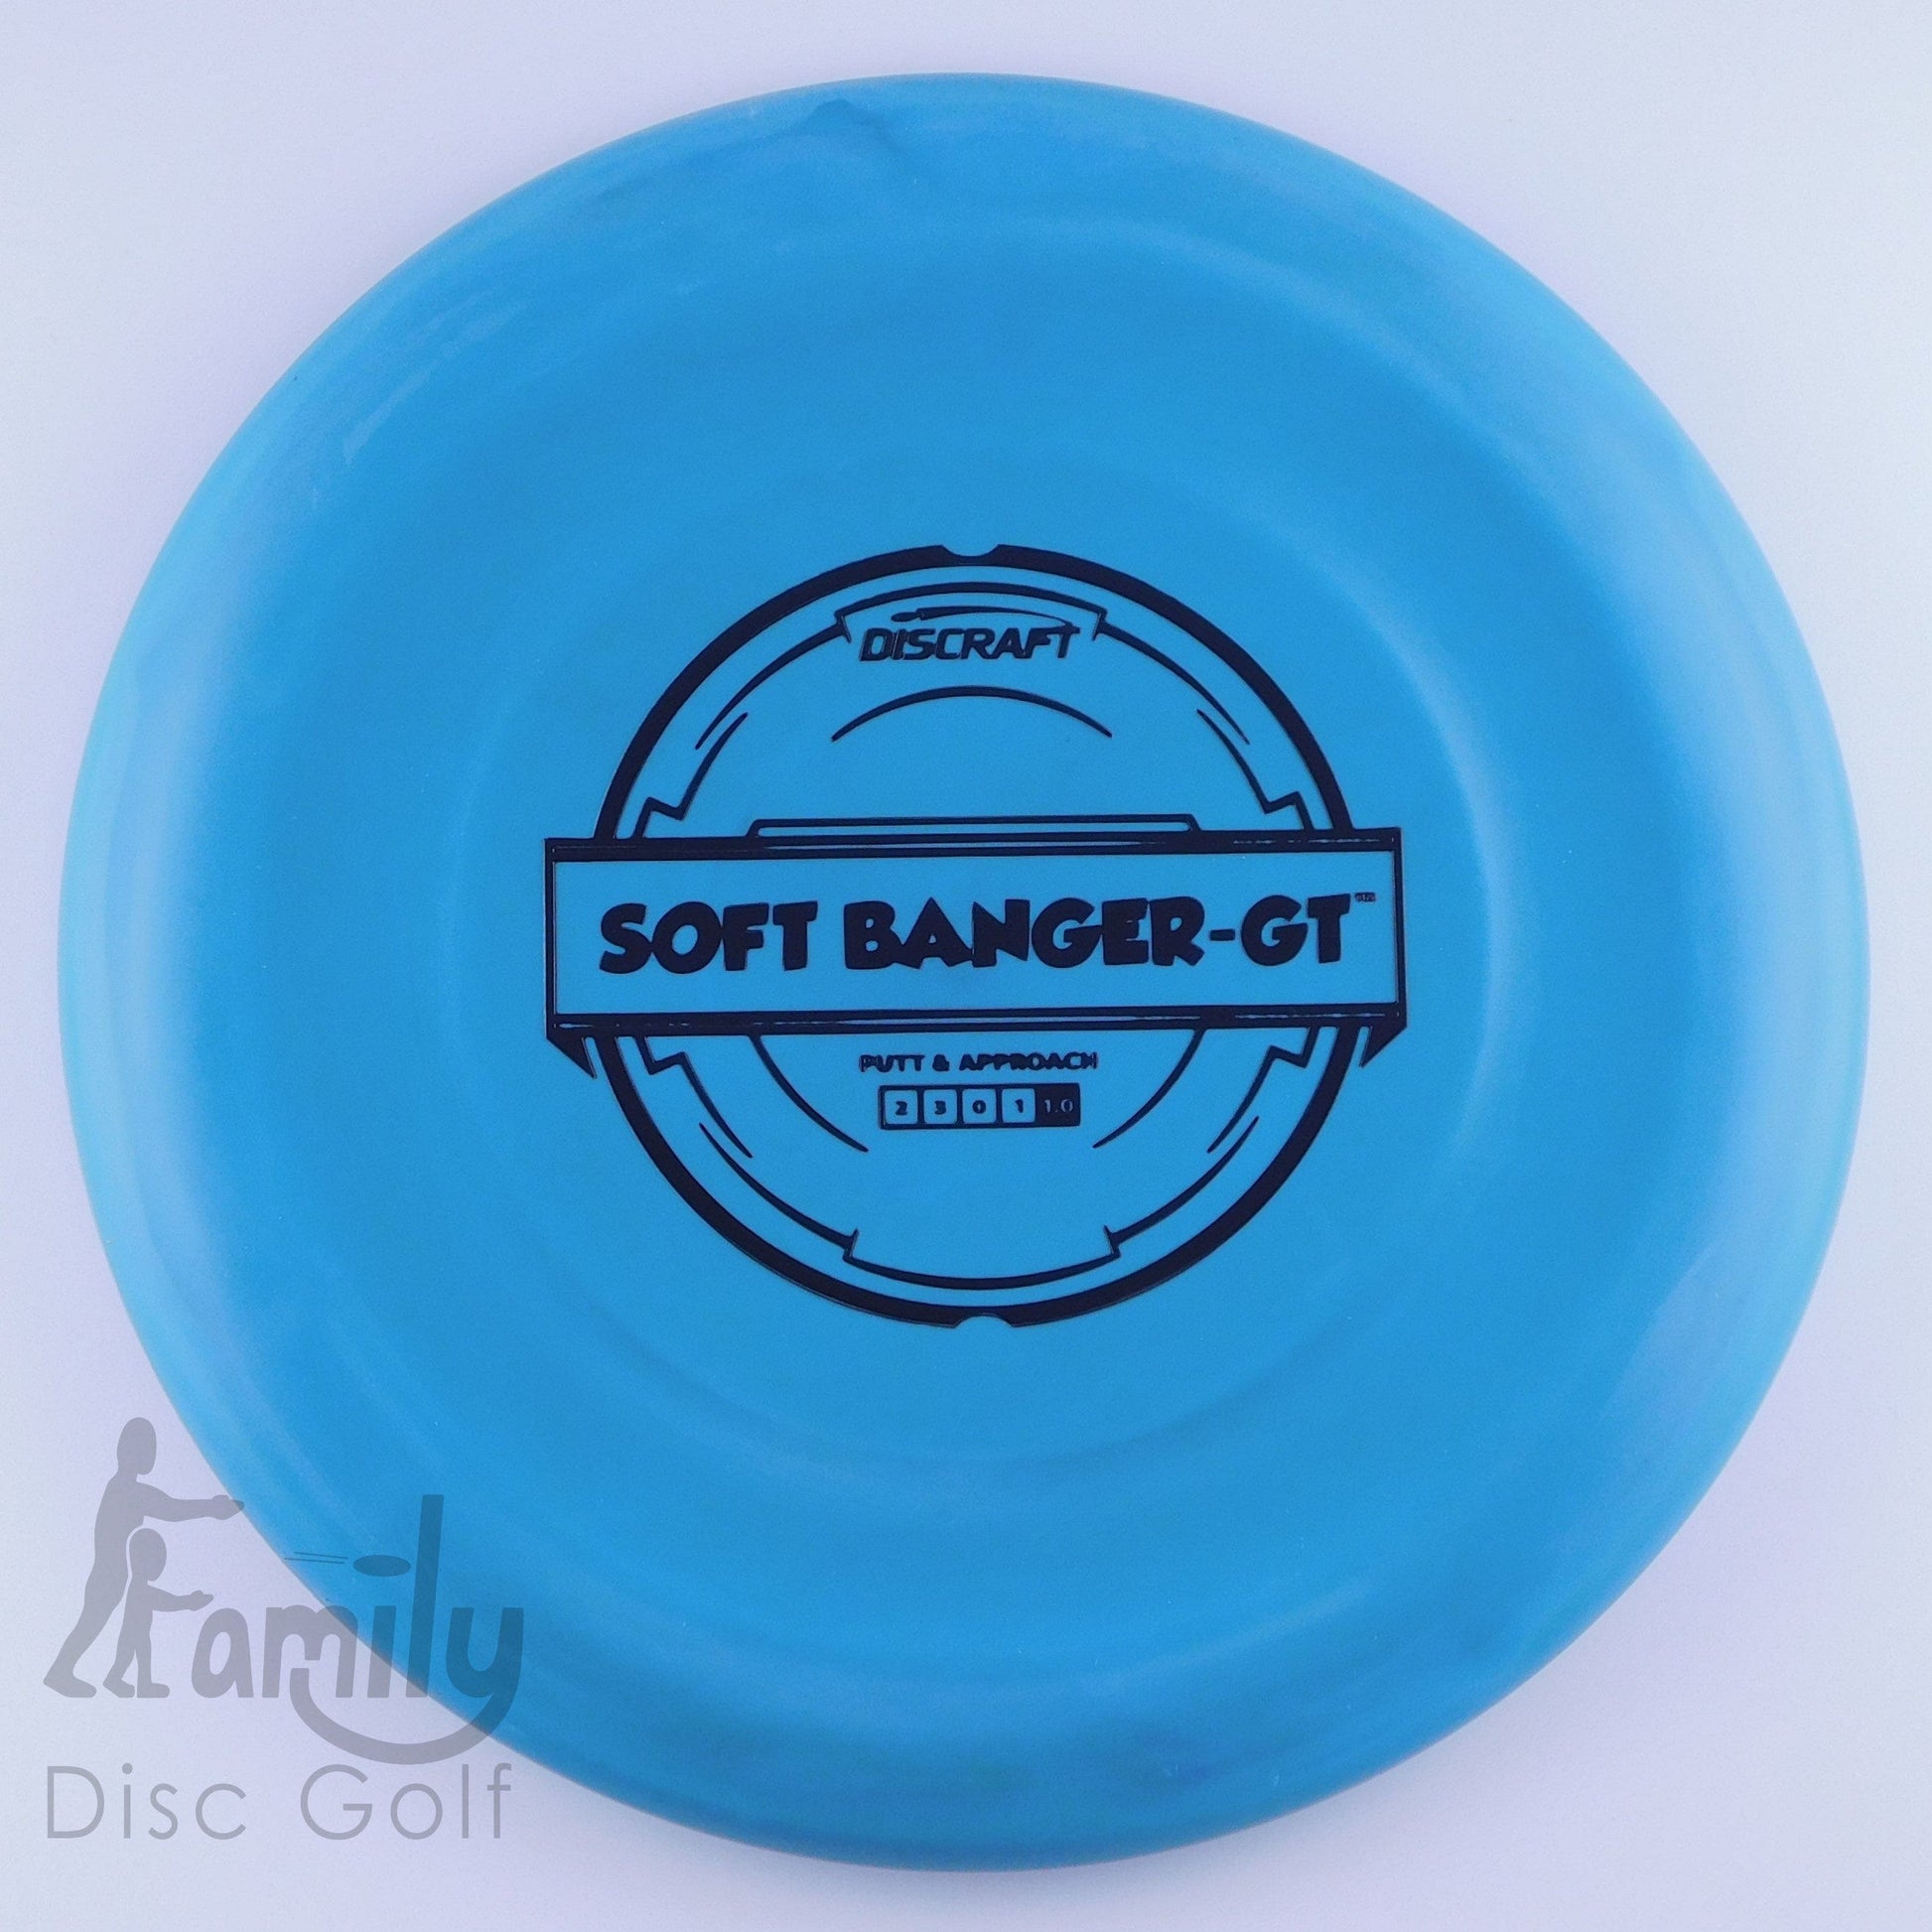 Discraft Banger GT - Putter Line Soft 2│3│0│1 173.1g - Blue - Discraft Banger GT - Putter Line Soft - 100635